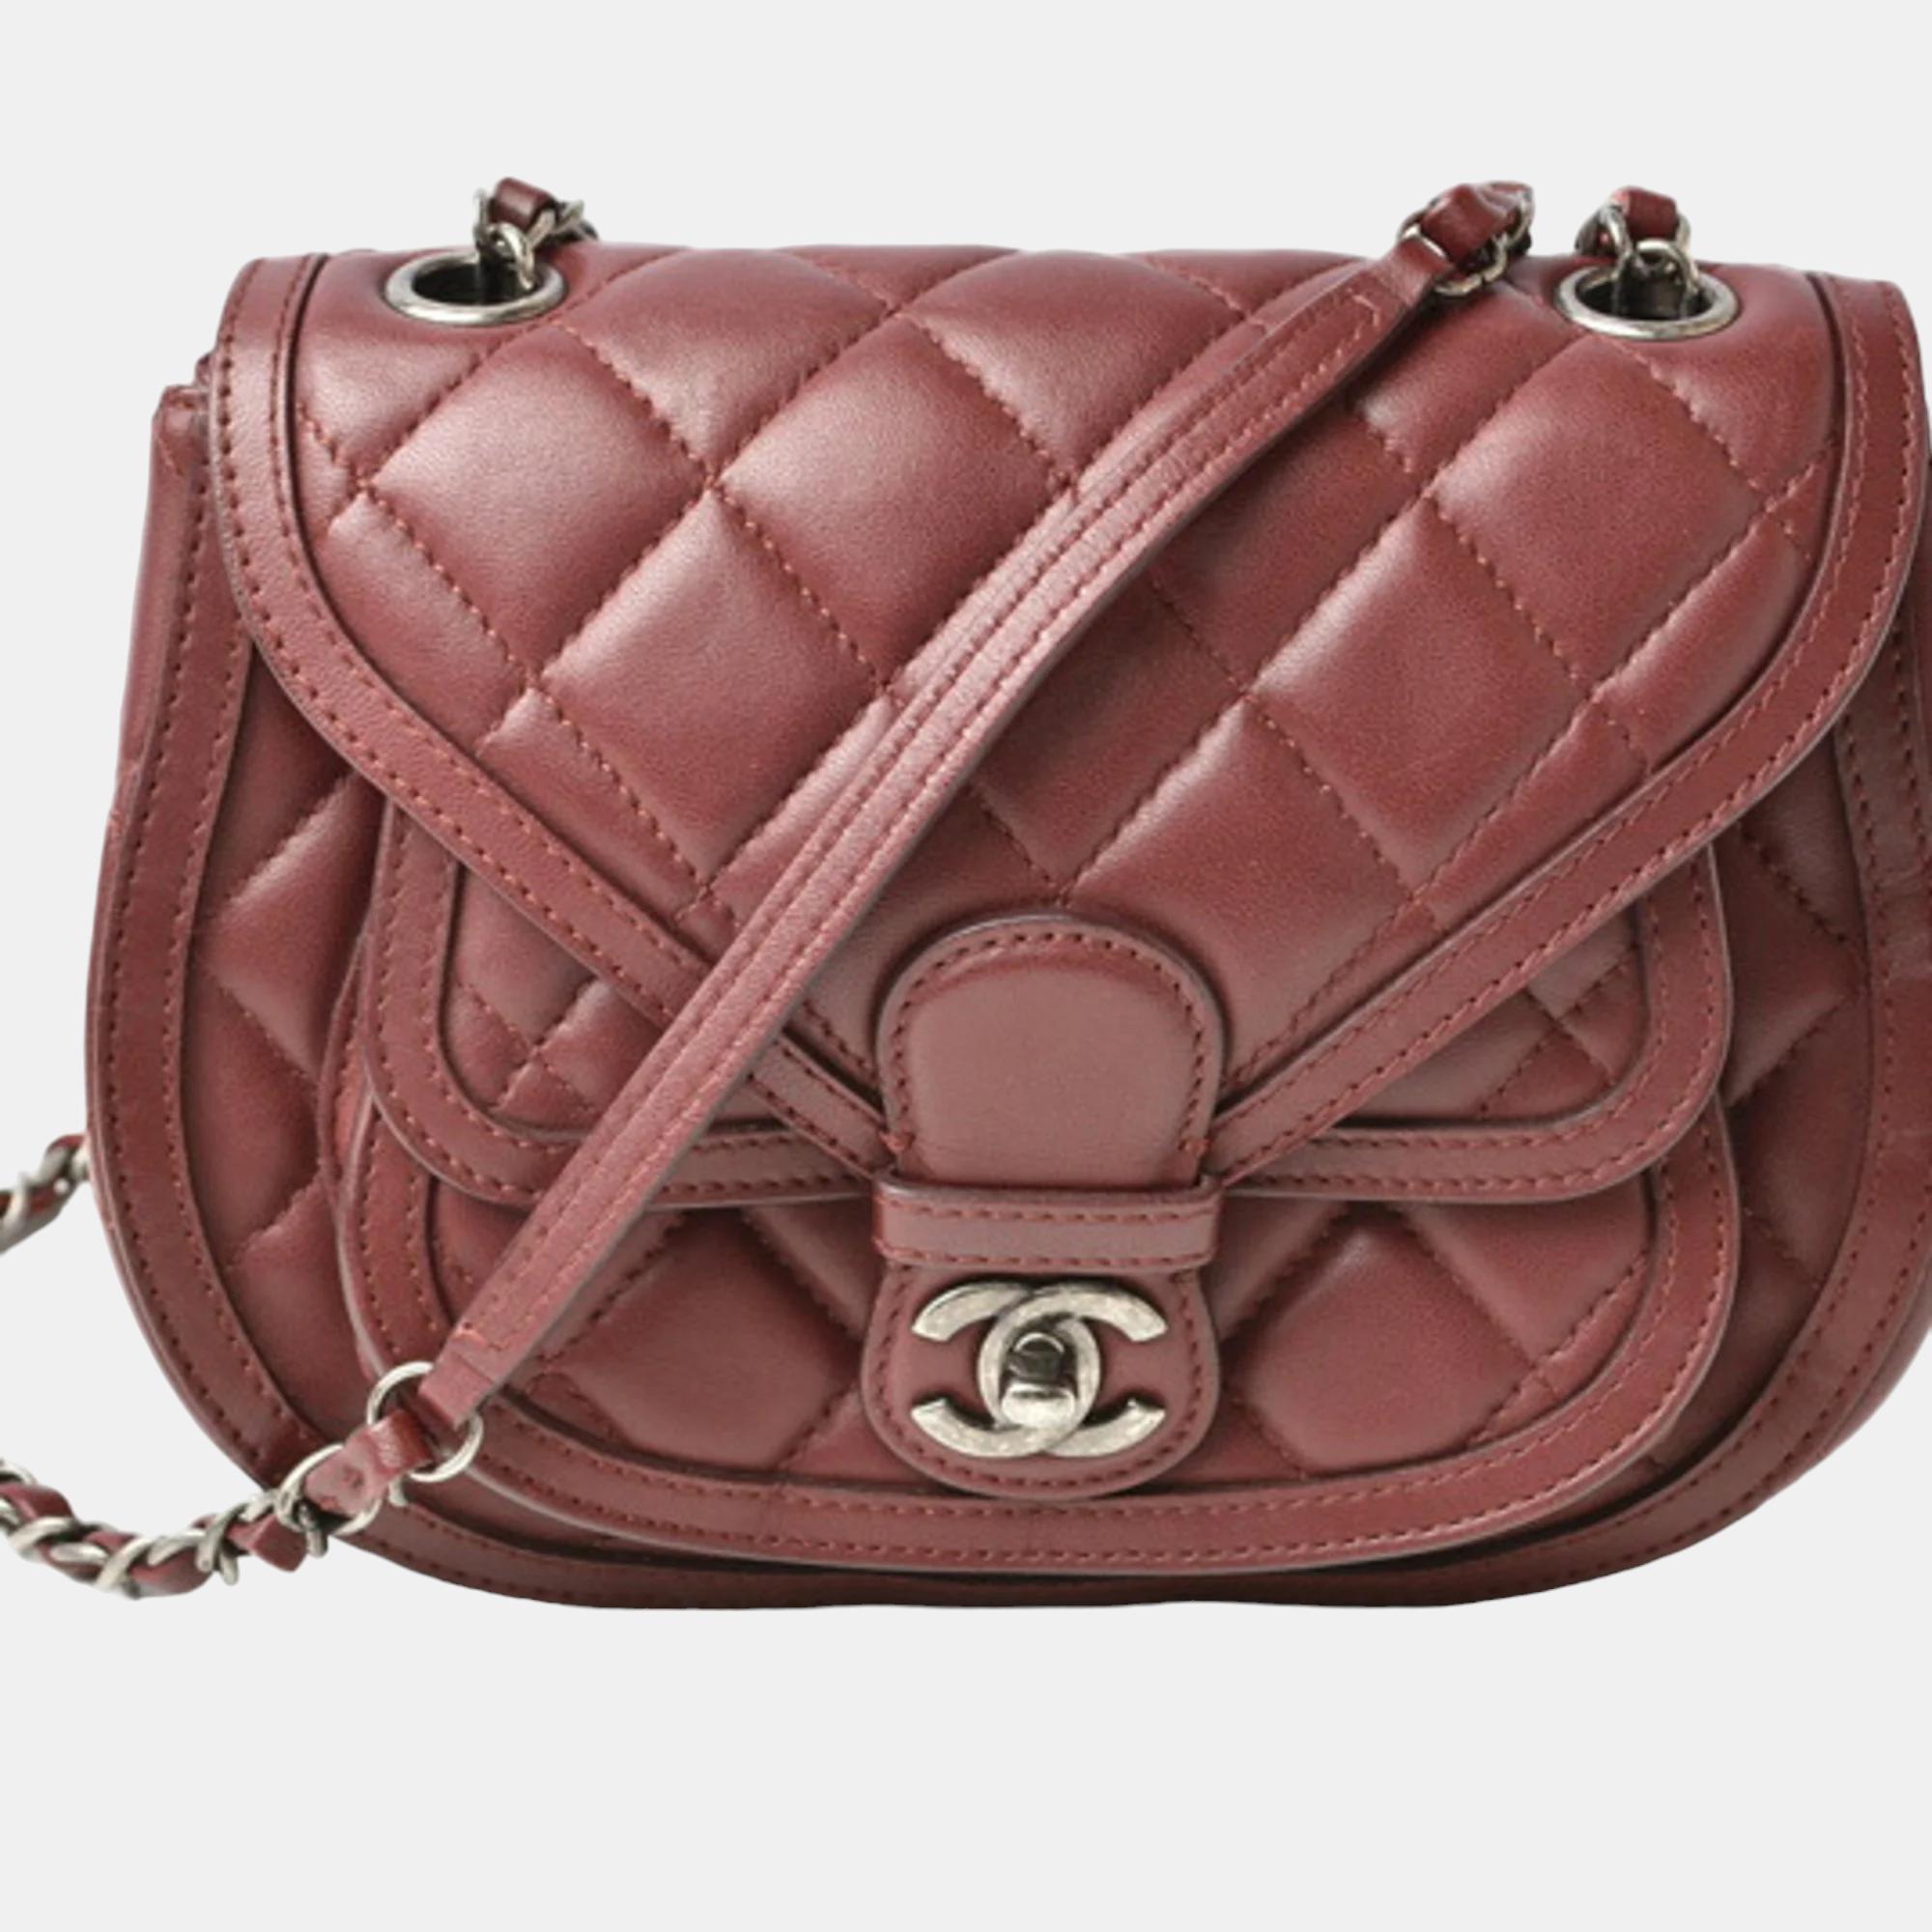 Chanel burgundy leather paris-salzburg quilted saddle bag